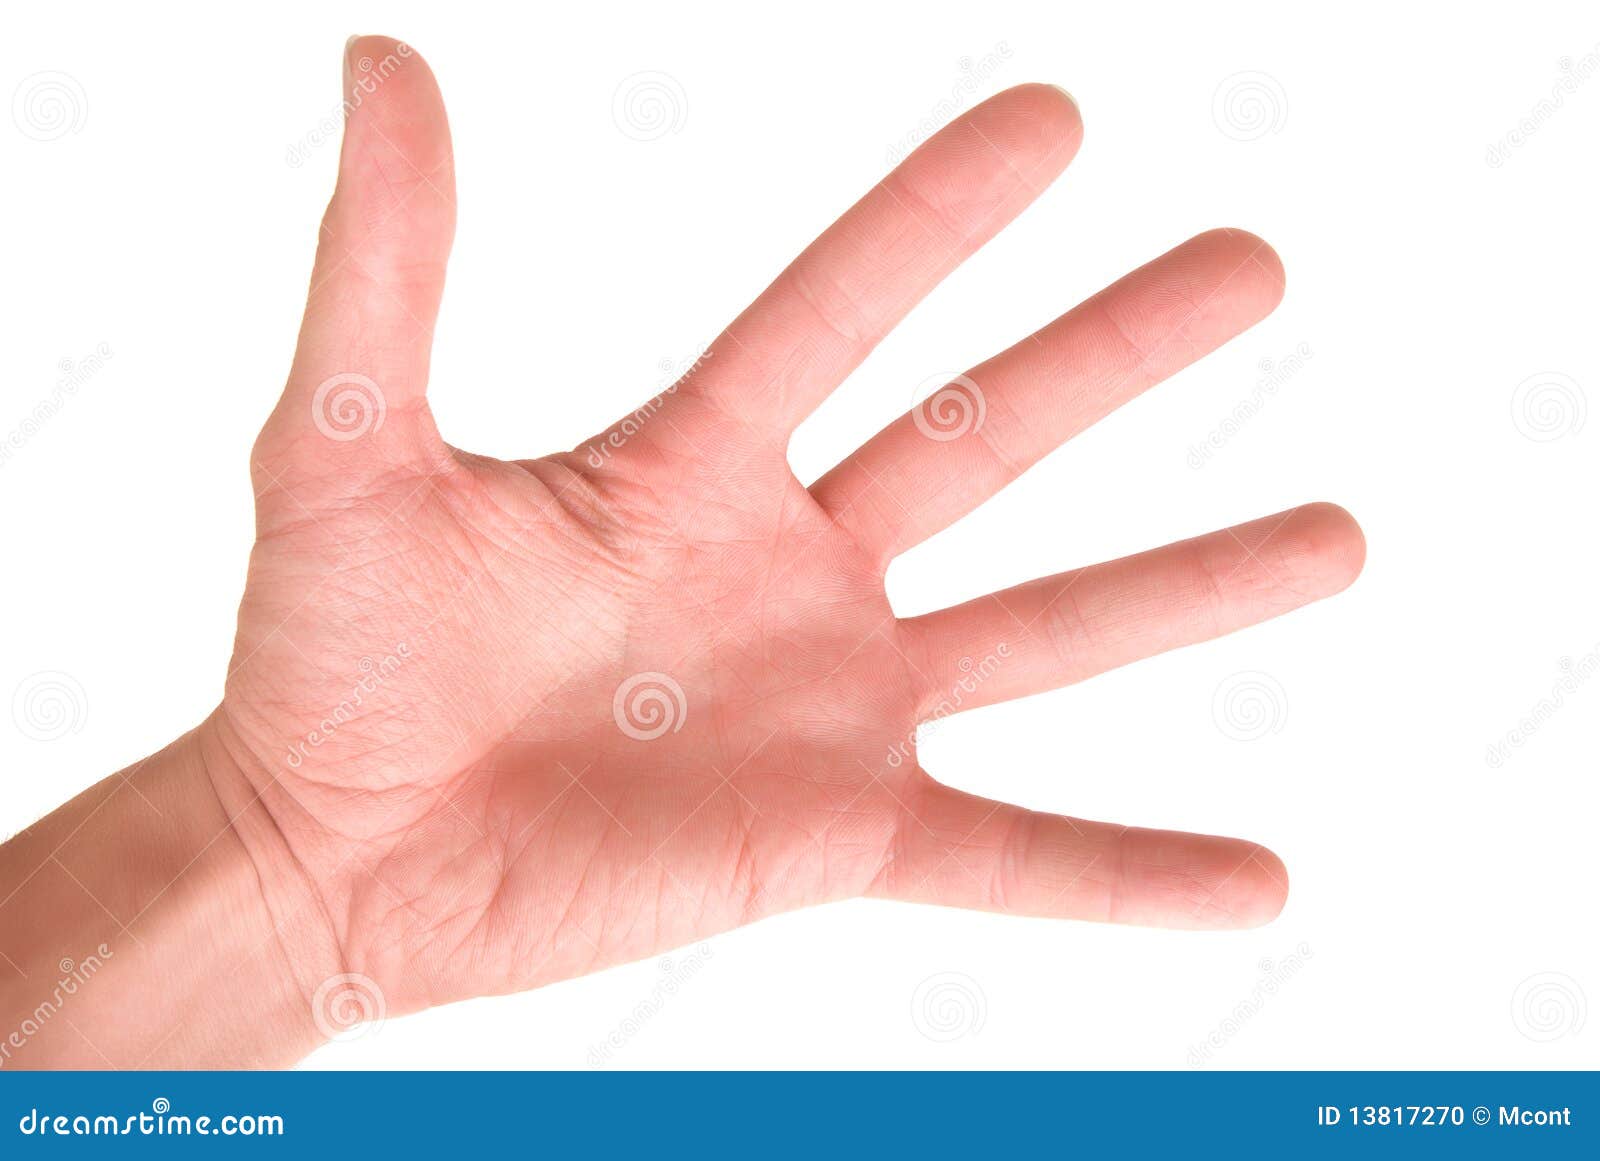 Human arm stock photo. Image of hand, palm, showing, pushing - 13817270